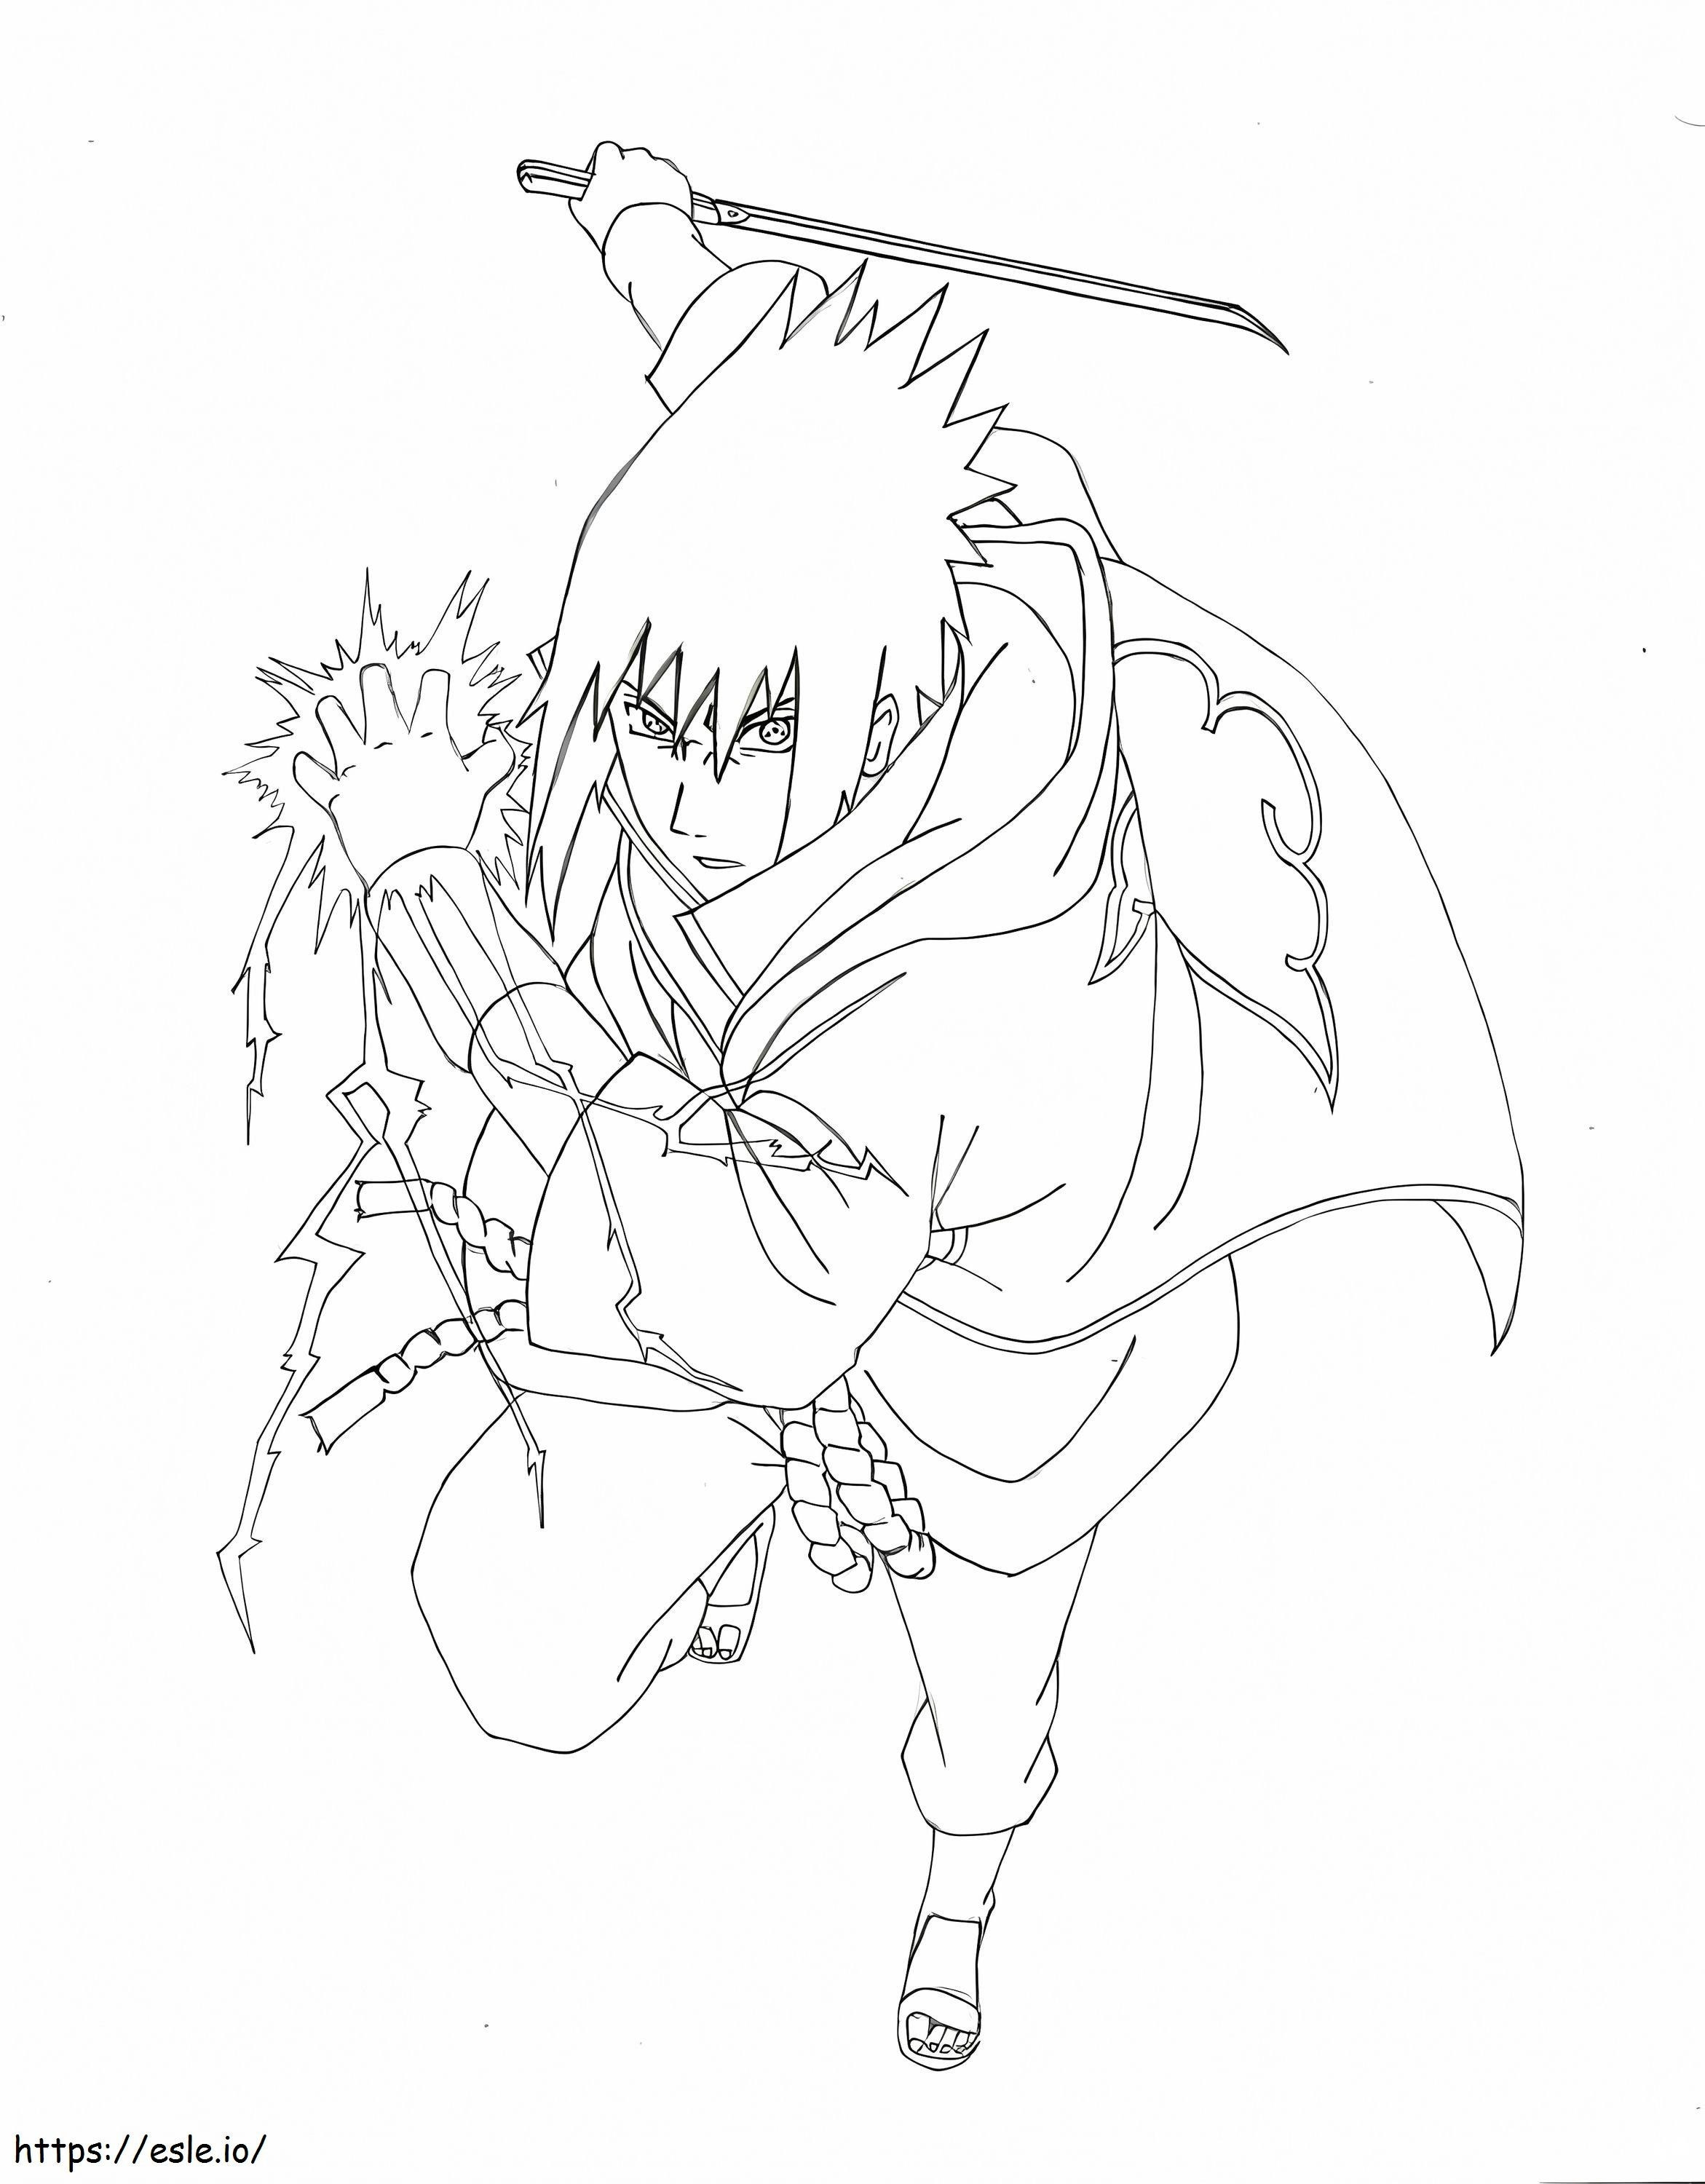 Sasuke With Sword And Chidori coloring page